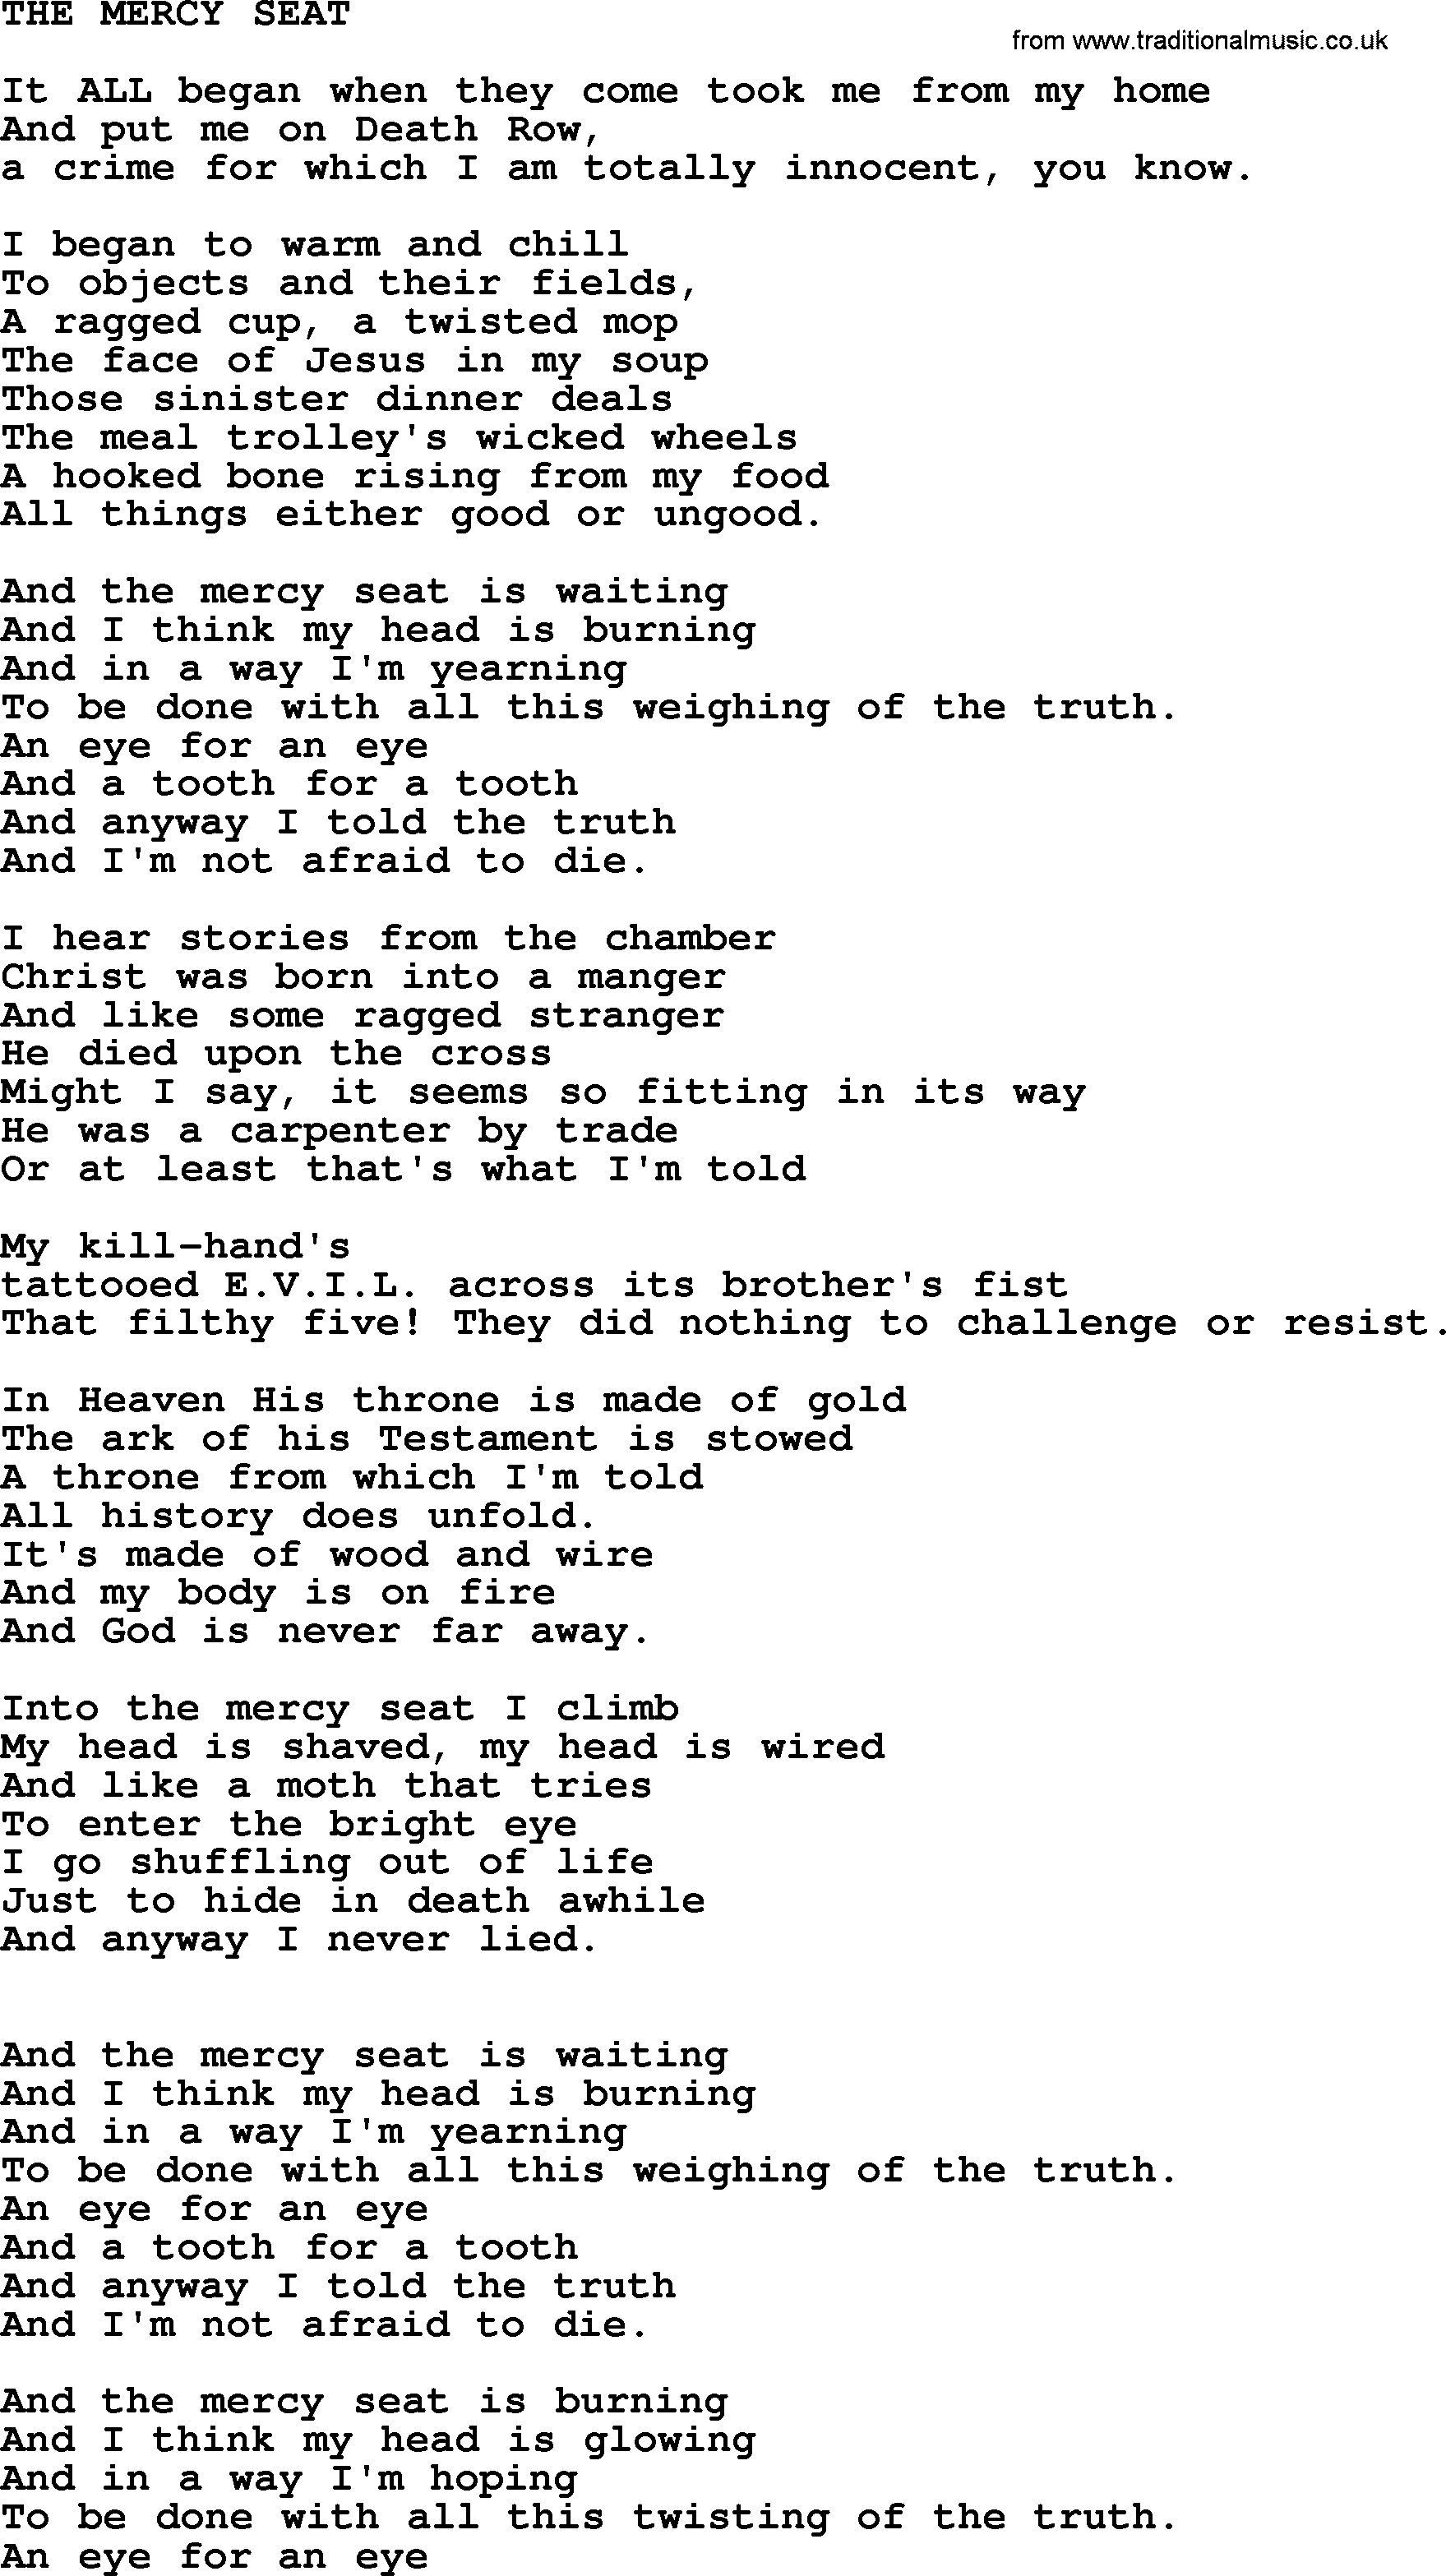 Johnny Cash song The Mercy Seat.txt lyrics